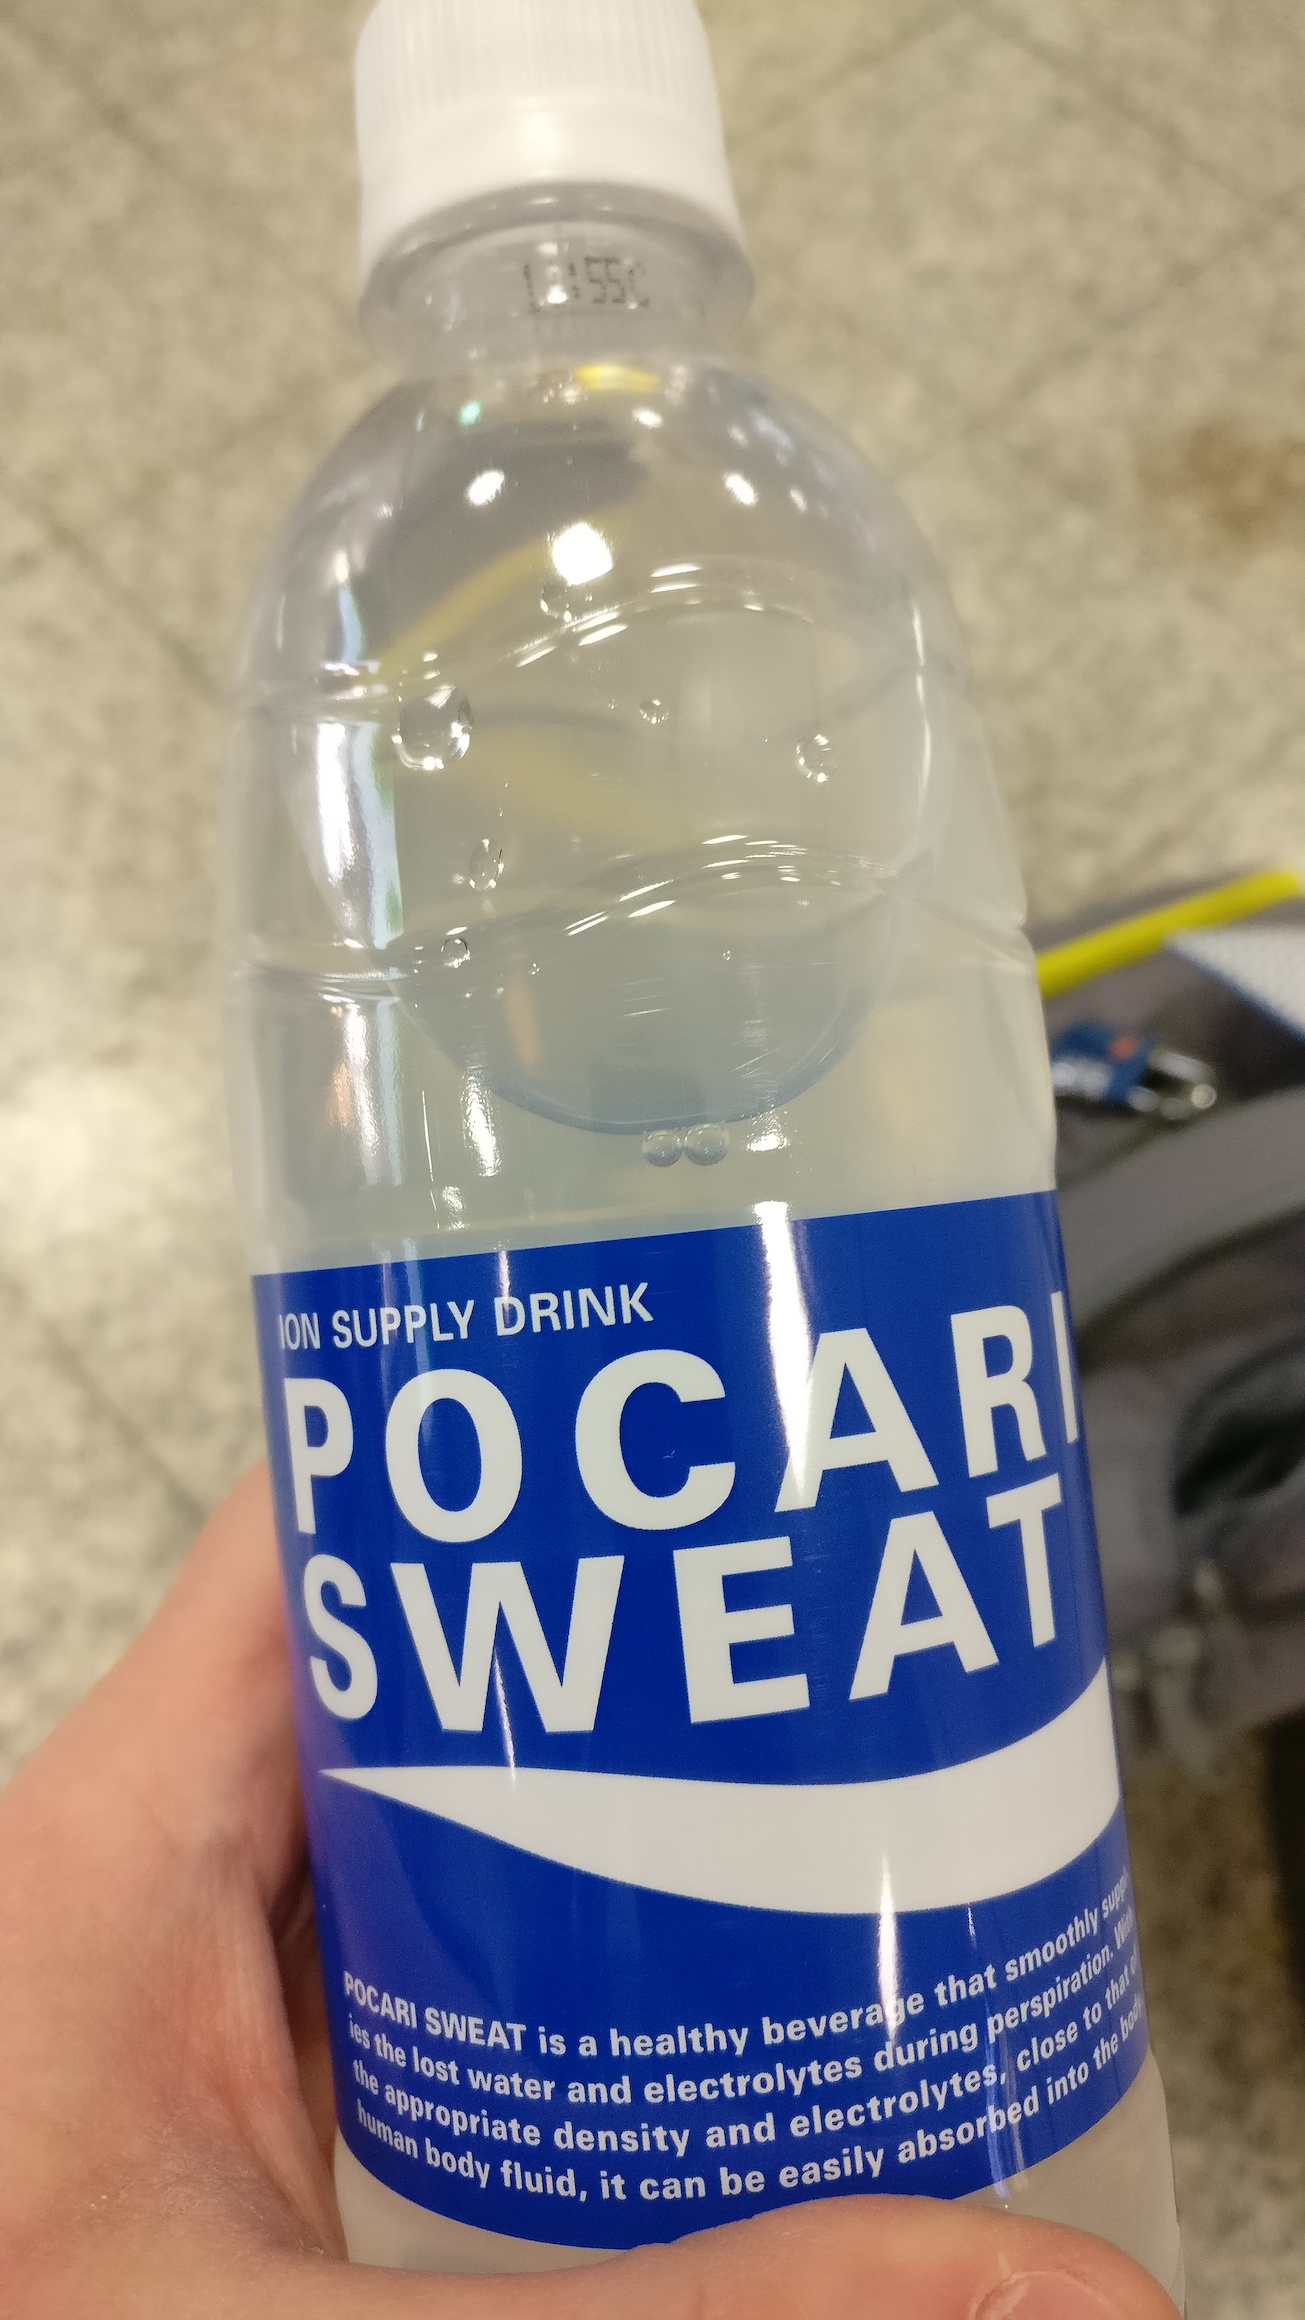 My literal first purchase, Pocari Sweat